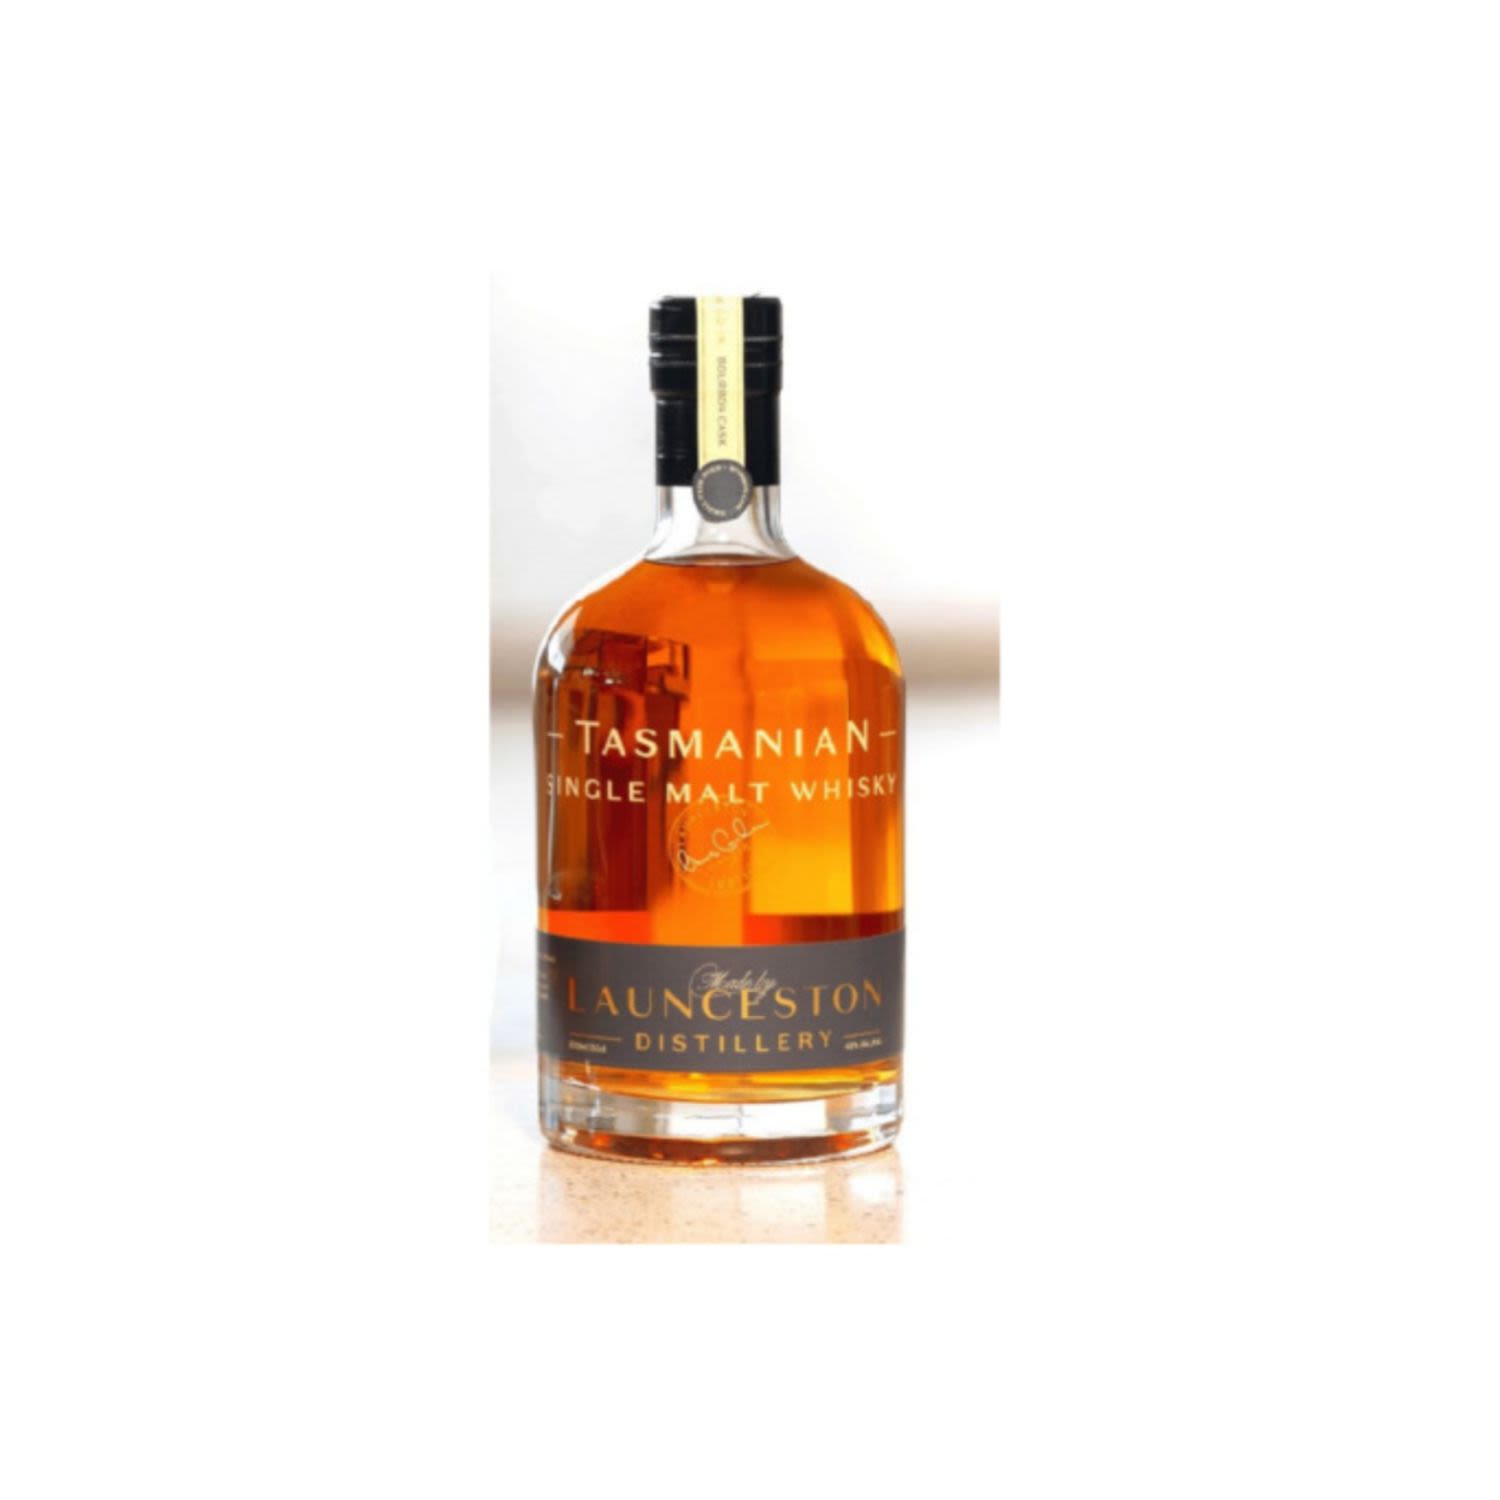 Launceston Distillery Bourbon Cask Matured Single Malt Tasmanian Whiskey 500mL Bottle